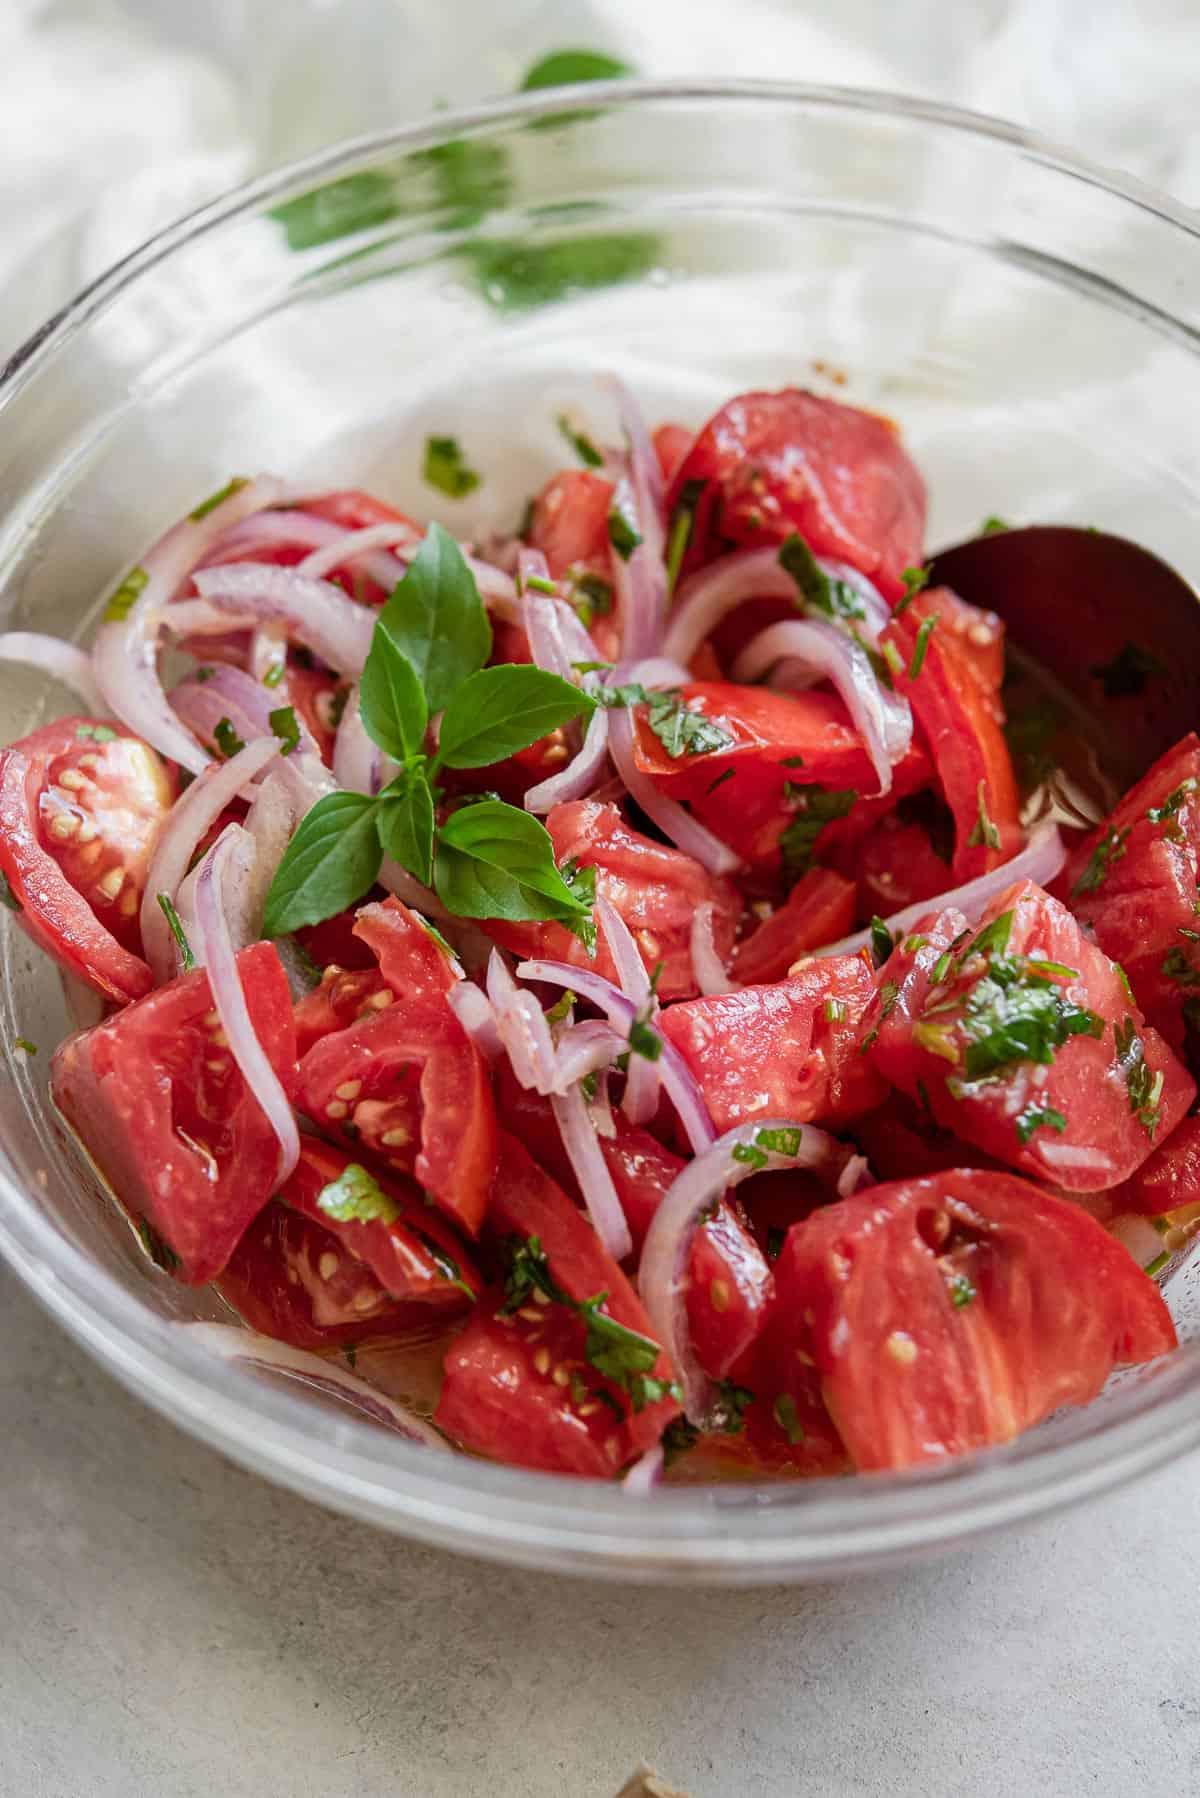 Marinated Tomato Salad With Herbs